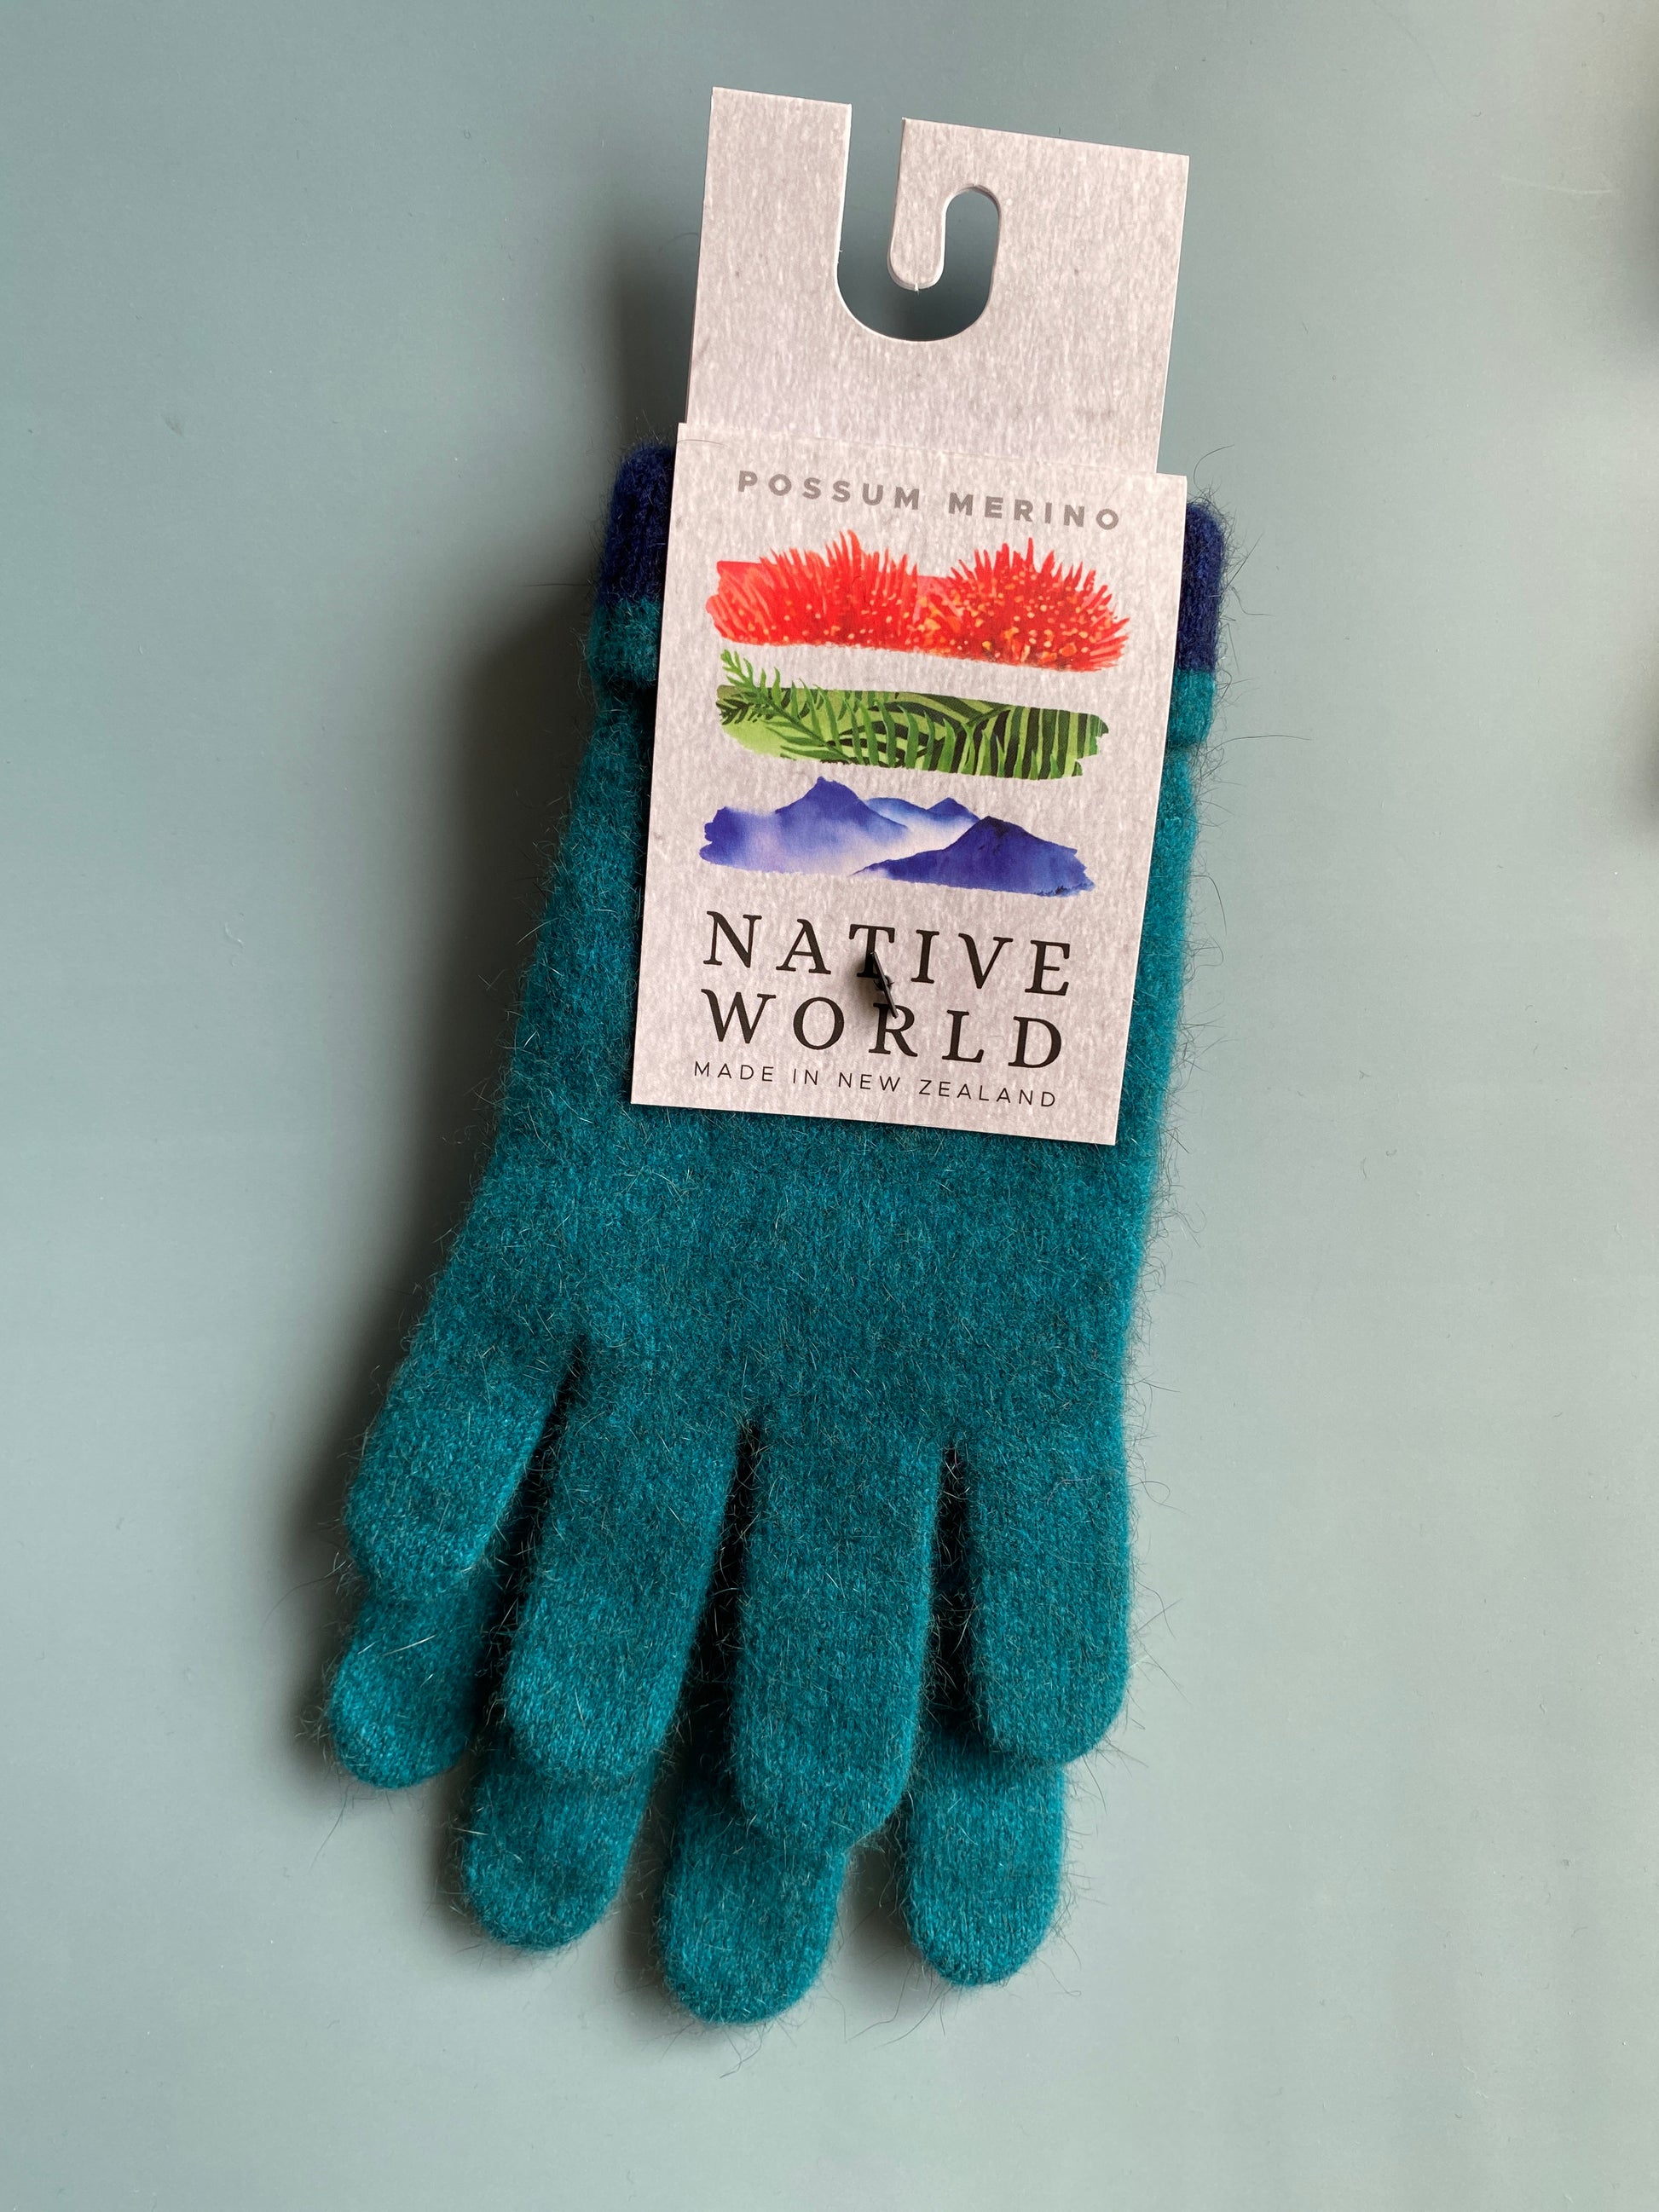 azure teal gloves merino possum made in new zealand